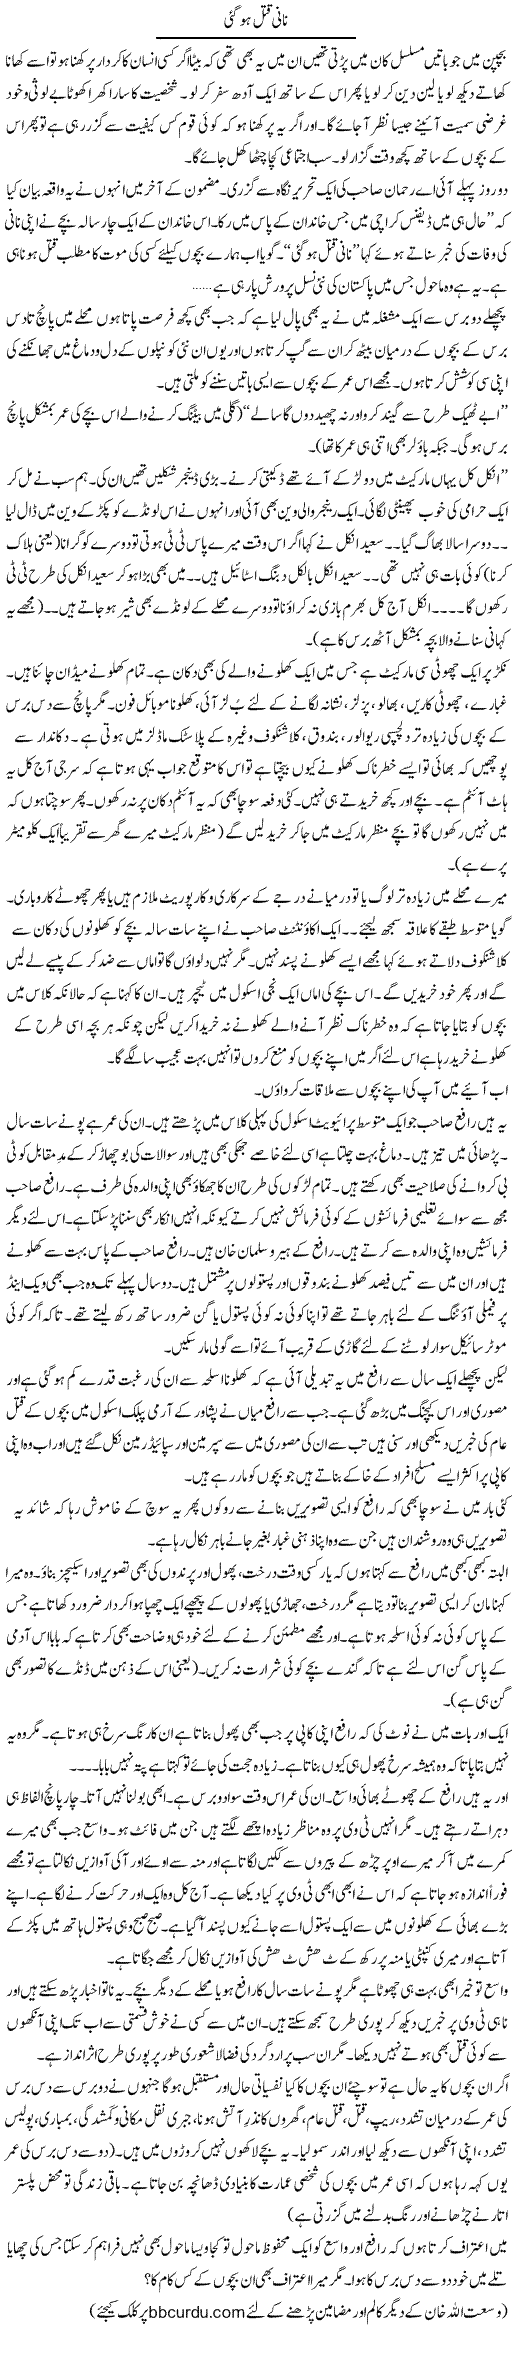 Nani Qatal Ho Gayi | Wusat Ullah Khan | Daily Urdu Columns